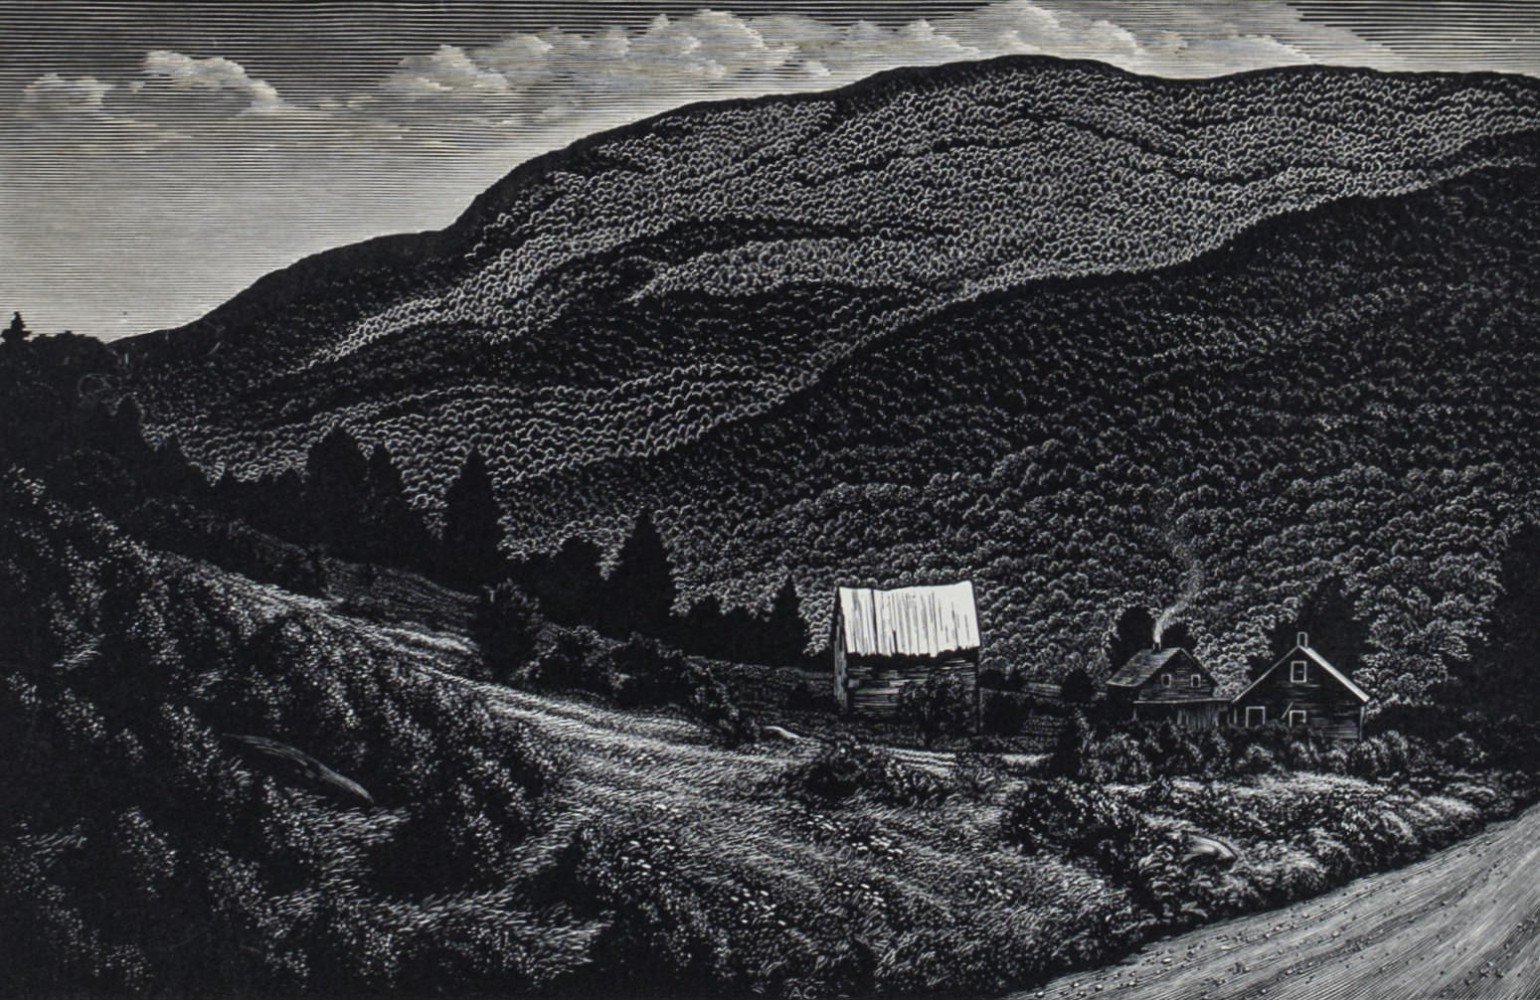 Asa Cheffetz (American 1897-1965) In Deep Vermont